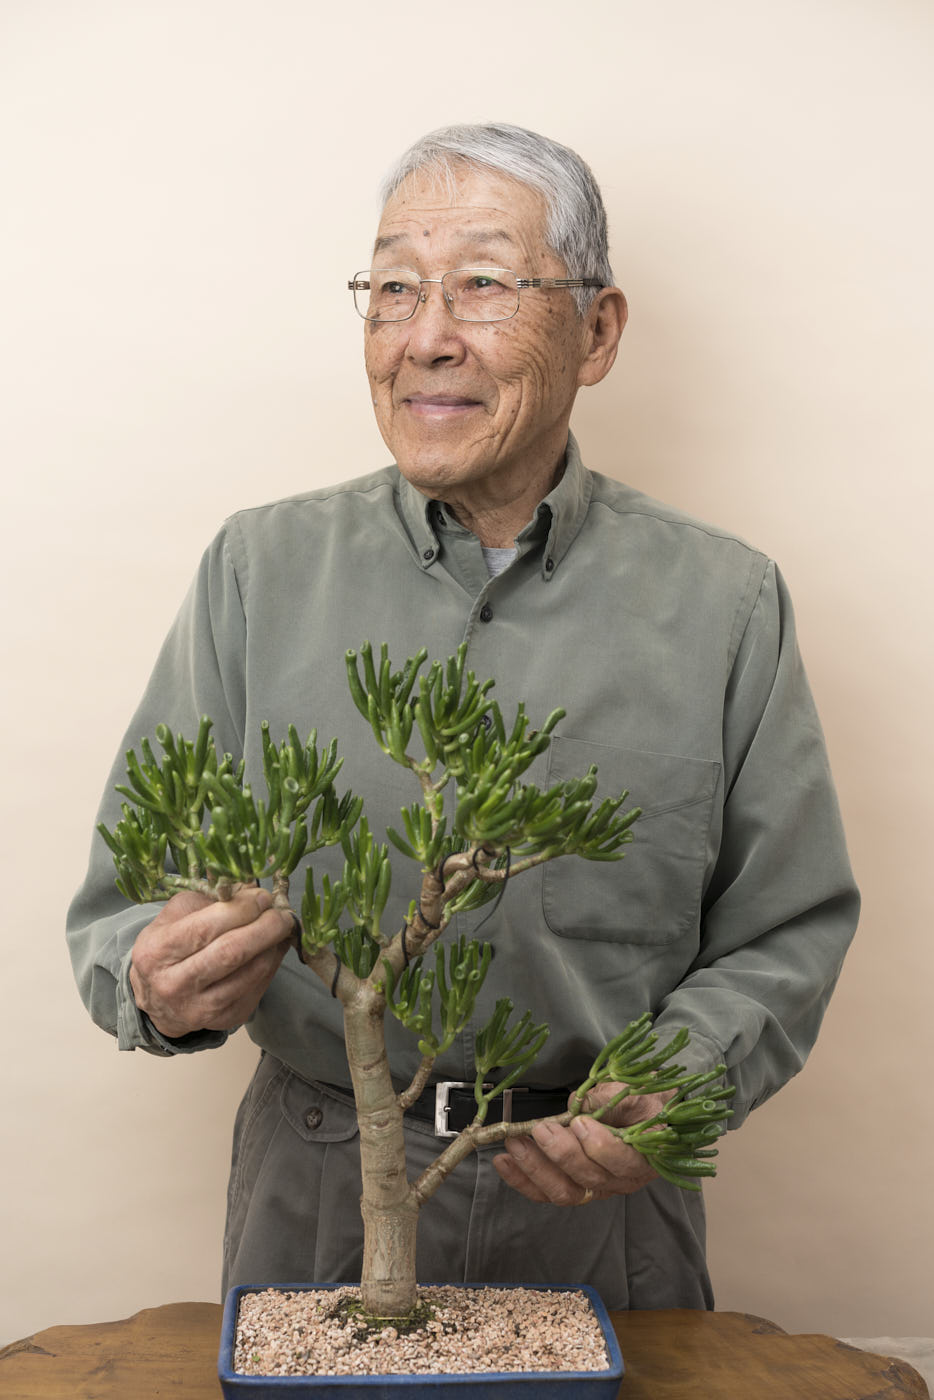 015-man-with-bonsai-portrait